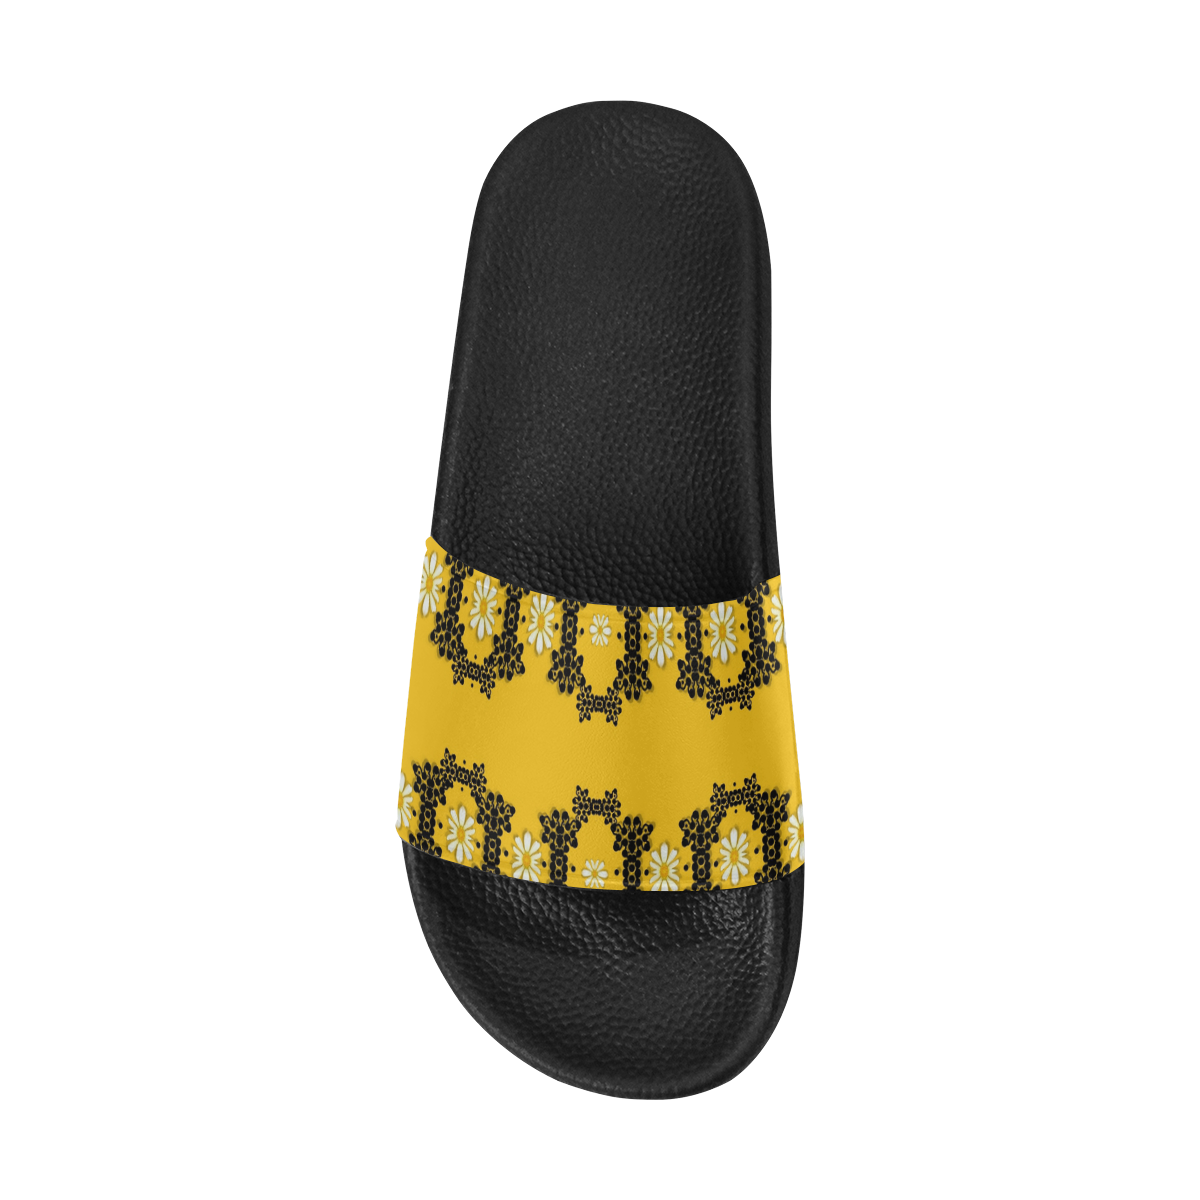 Ornate circulate is festive in flower decorative Men's Slide Sandals (Model 057)